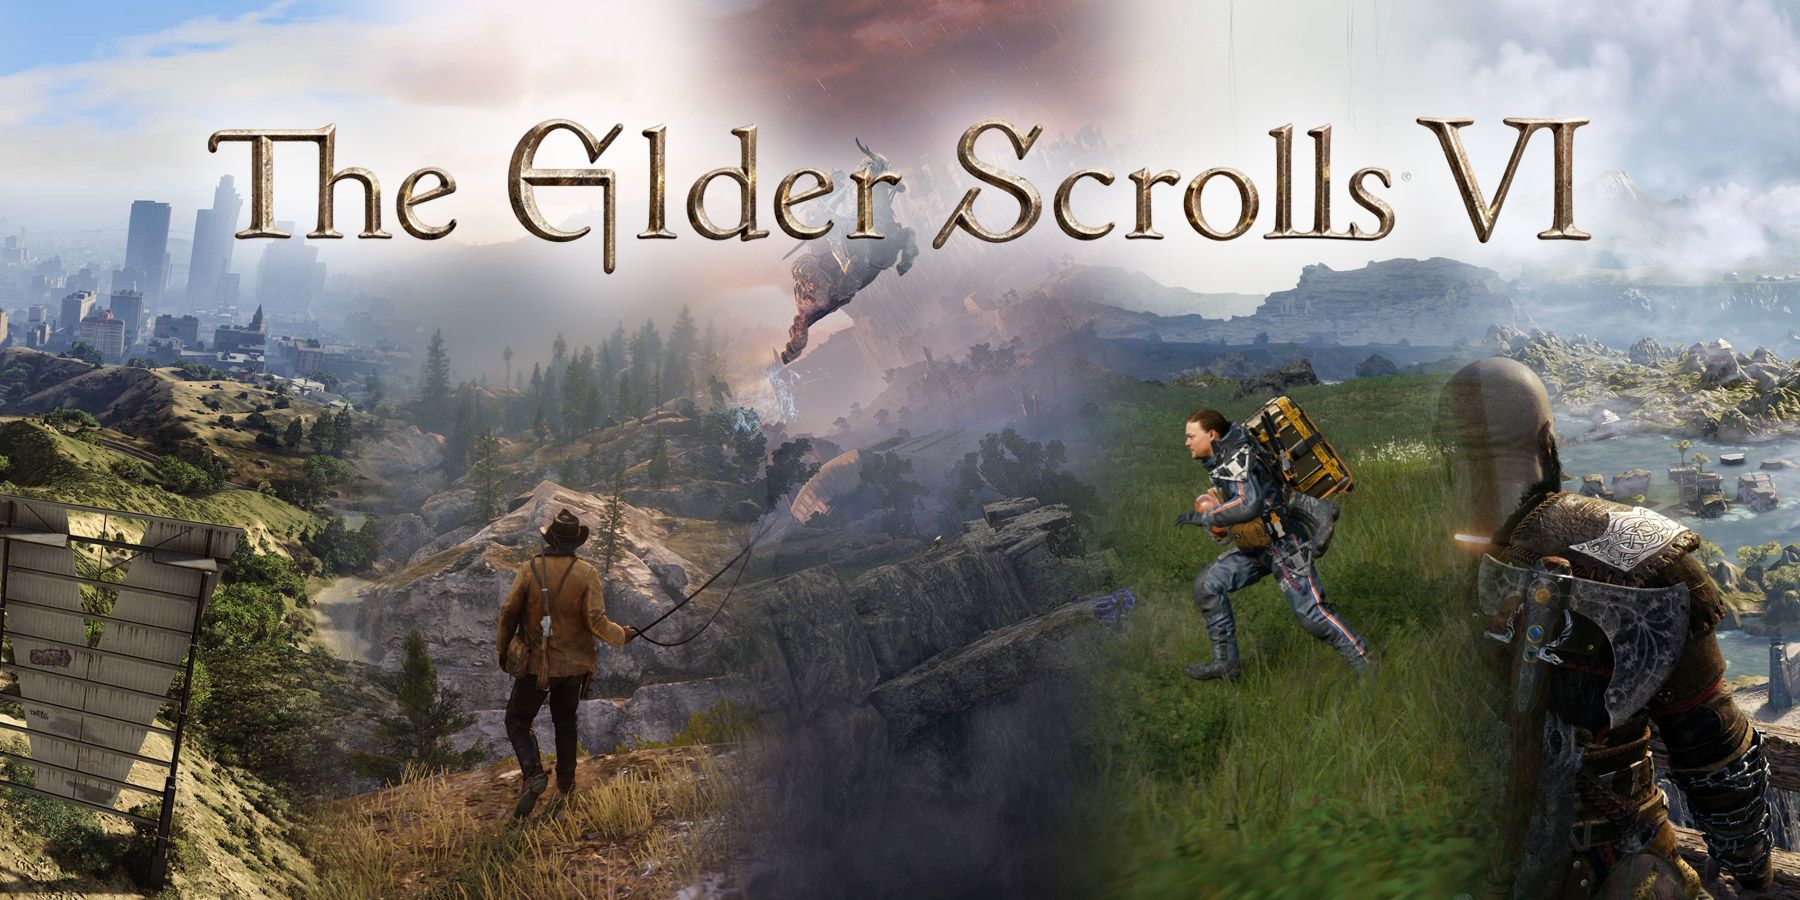 The Elder Scrolls 6 Central